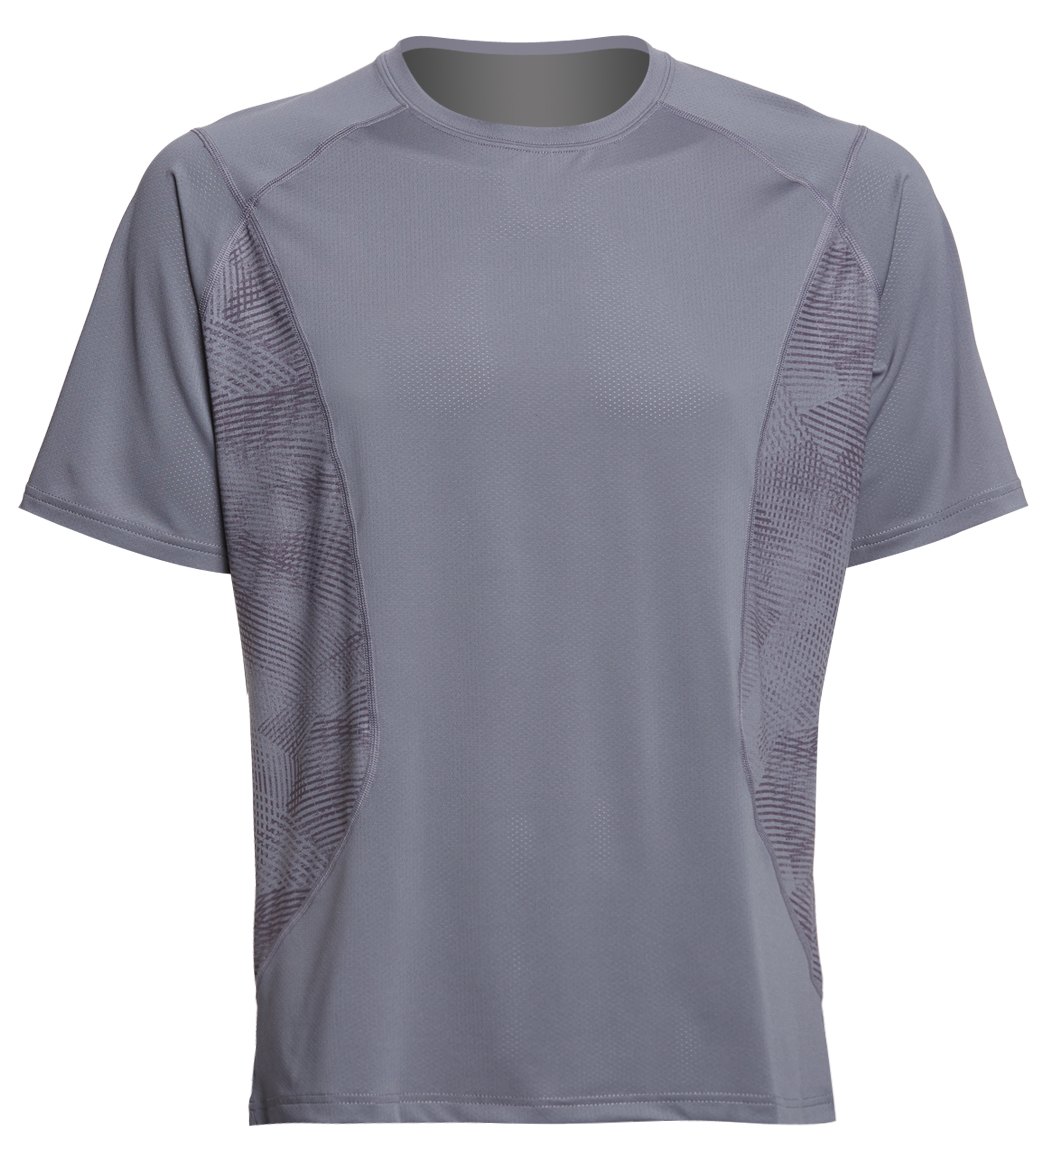 Asics Men's Pr Lyte Printed Short Sleeve Shirt - Castelrock/Atmosphere Print Large Polyester/Spandex - Swimoutlet.com